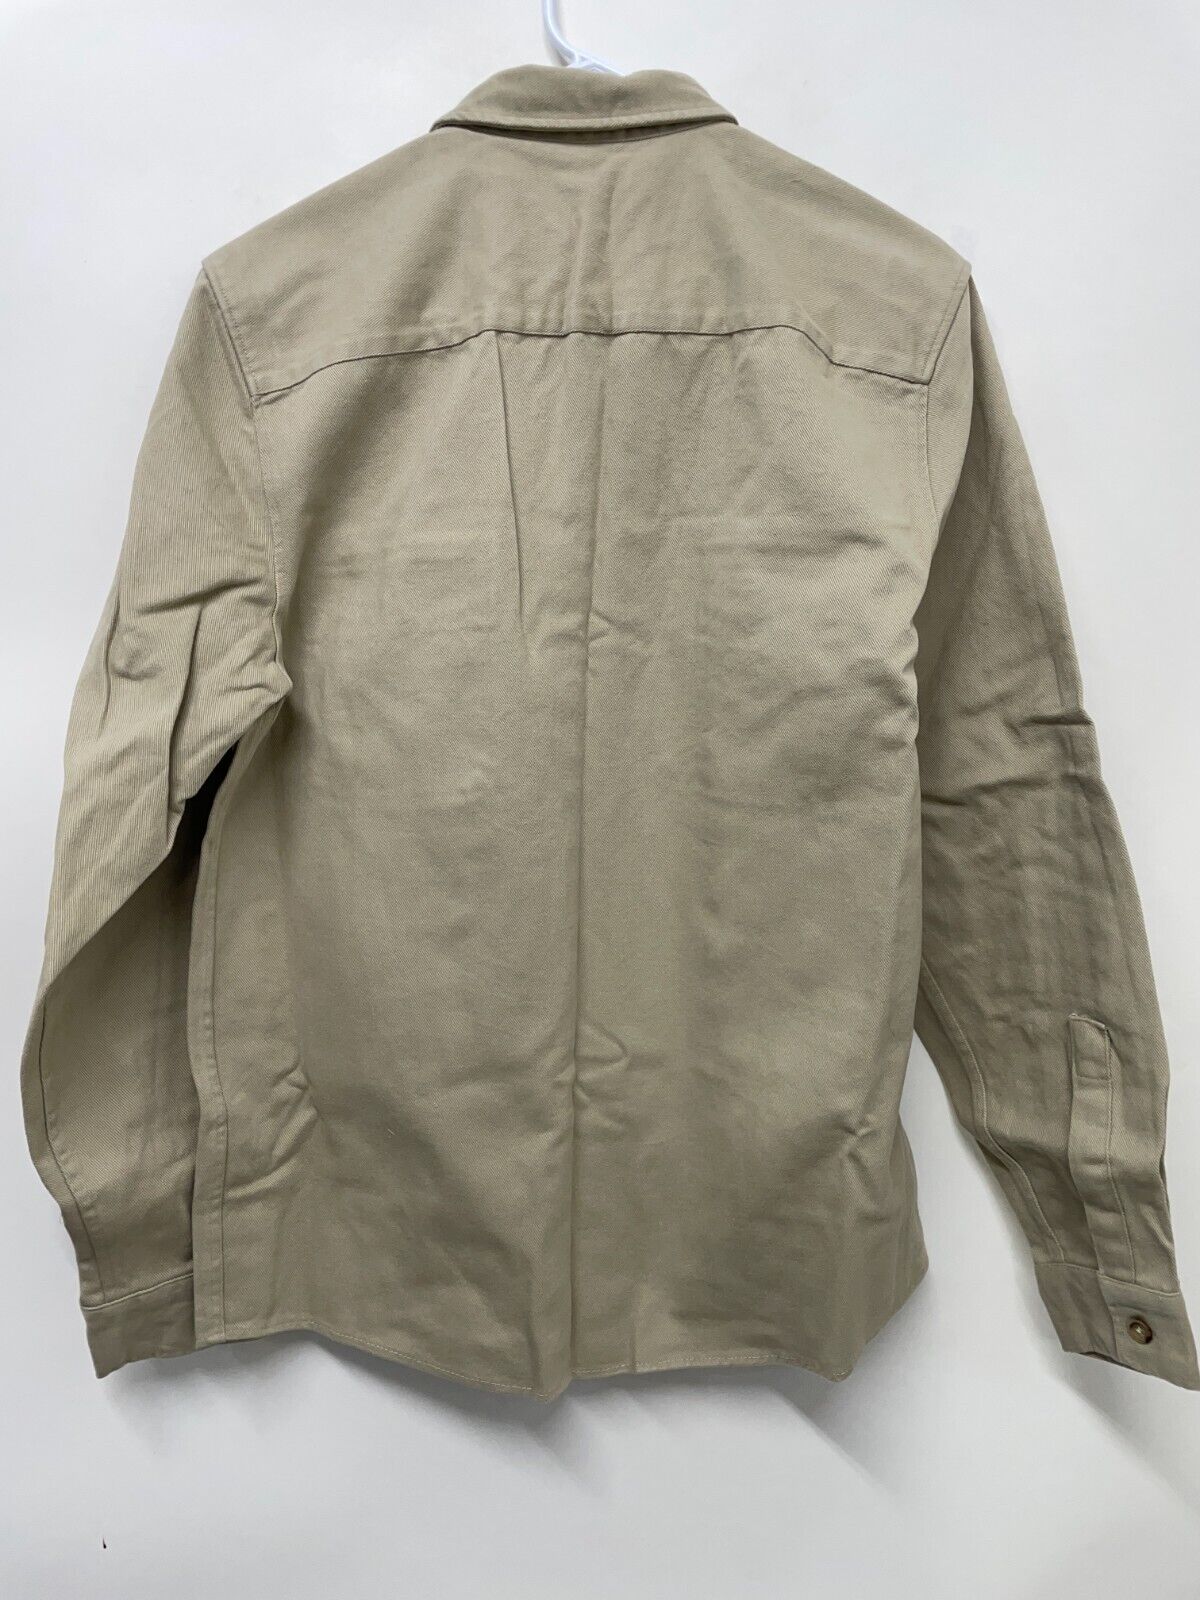 ASOS Mens M Cotton Shacket Stone Long Sleeve Button Up Collared Shirt Jacket